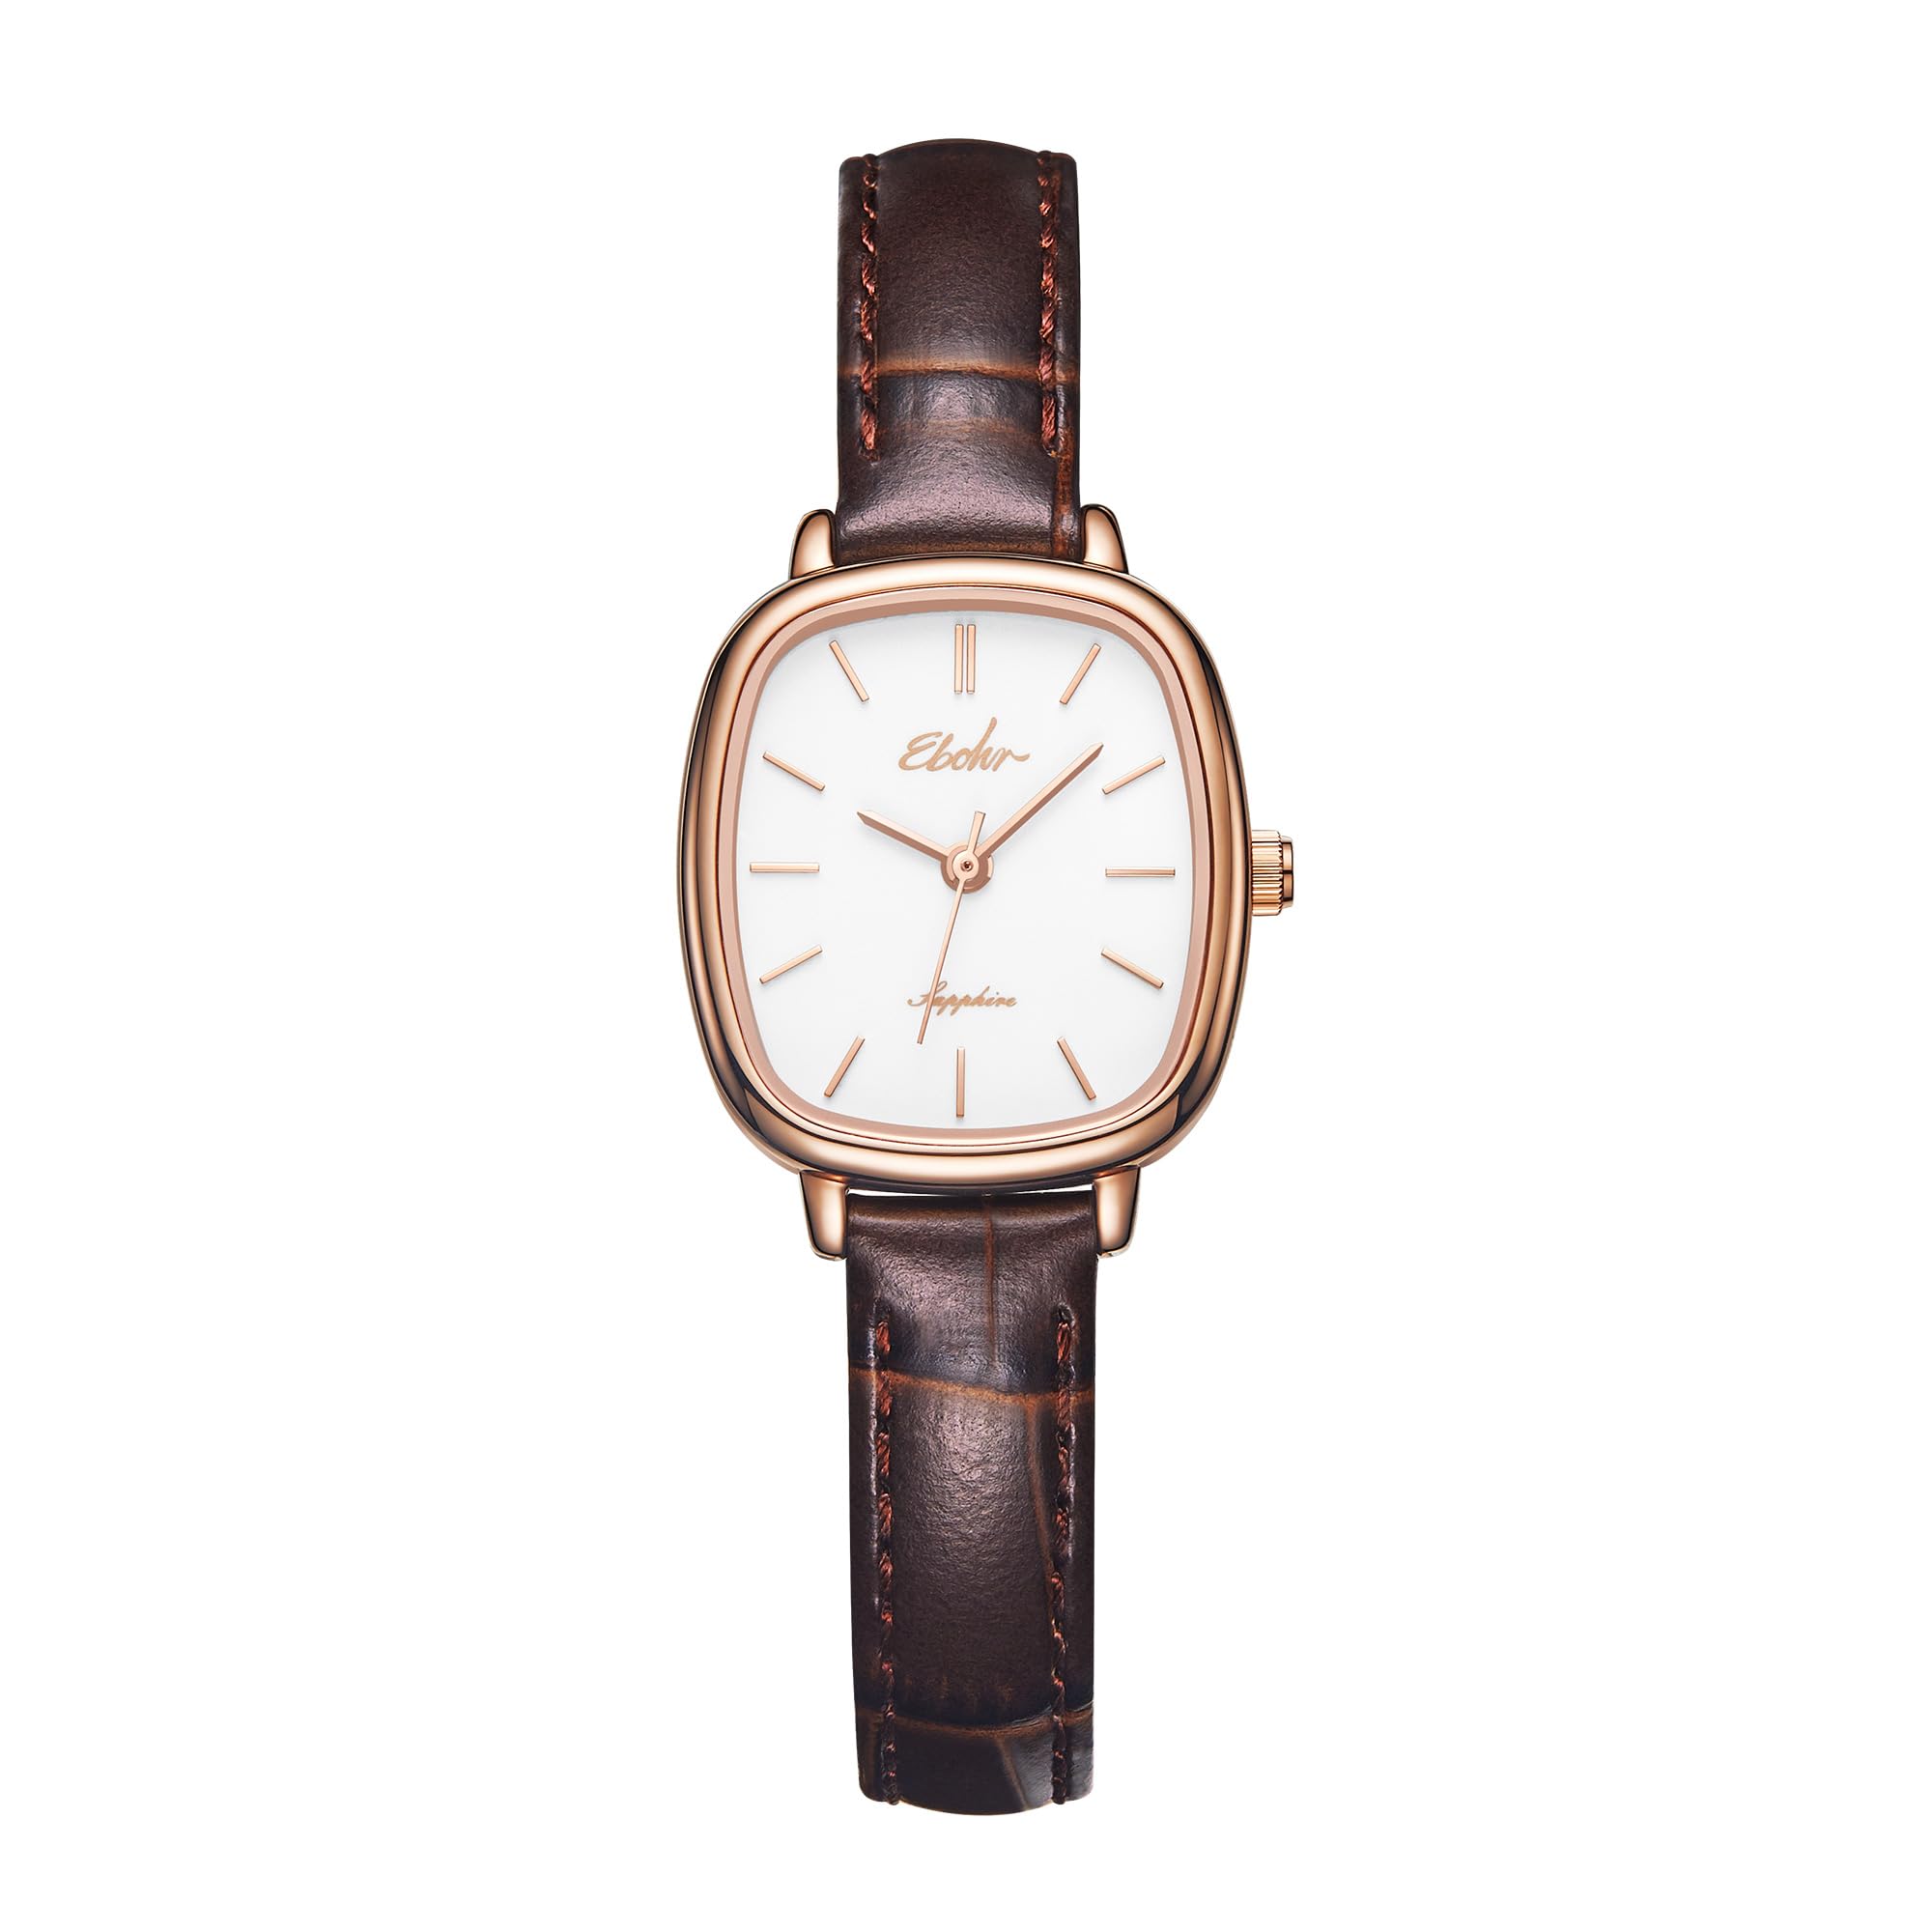 EBOHR Retro Square Womens Wrist Watch with Warm Brown Genuine Leather Strap Classic Roman Numerals - Fashionable Elegant